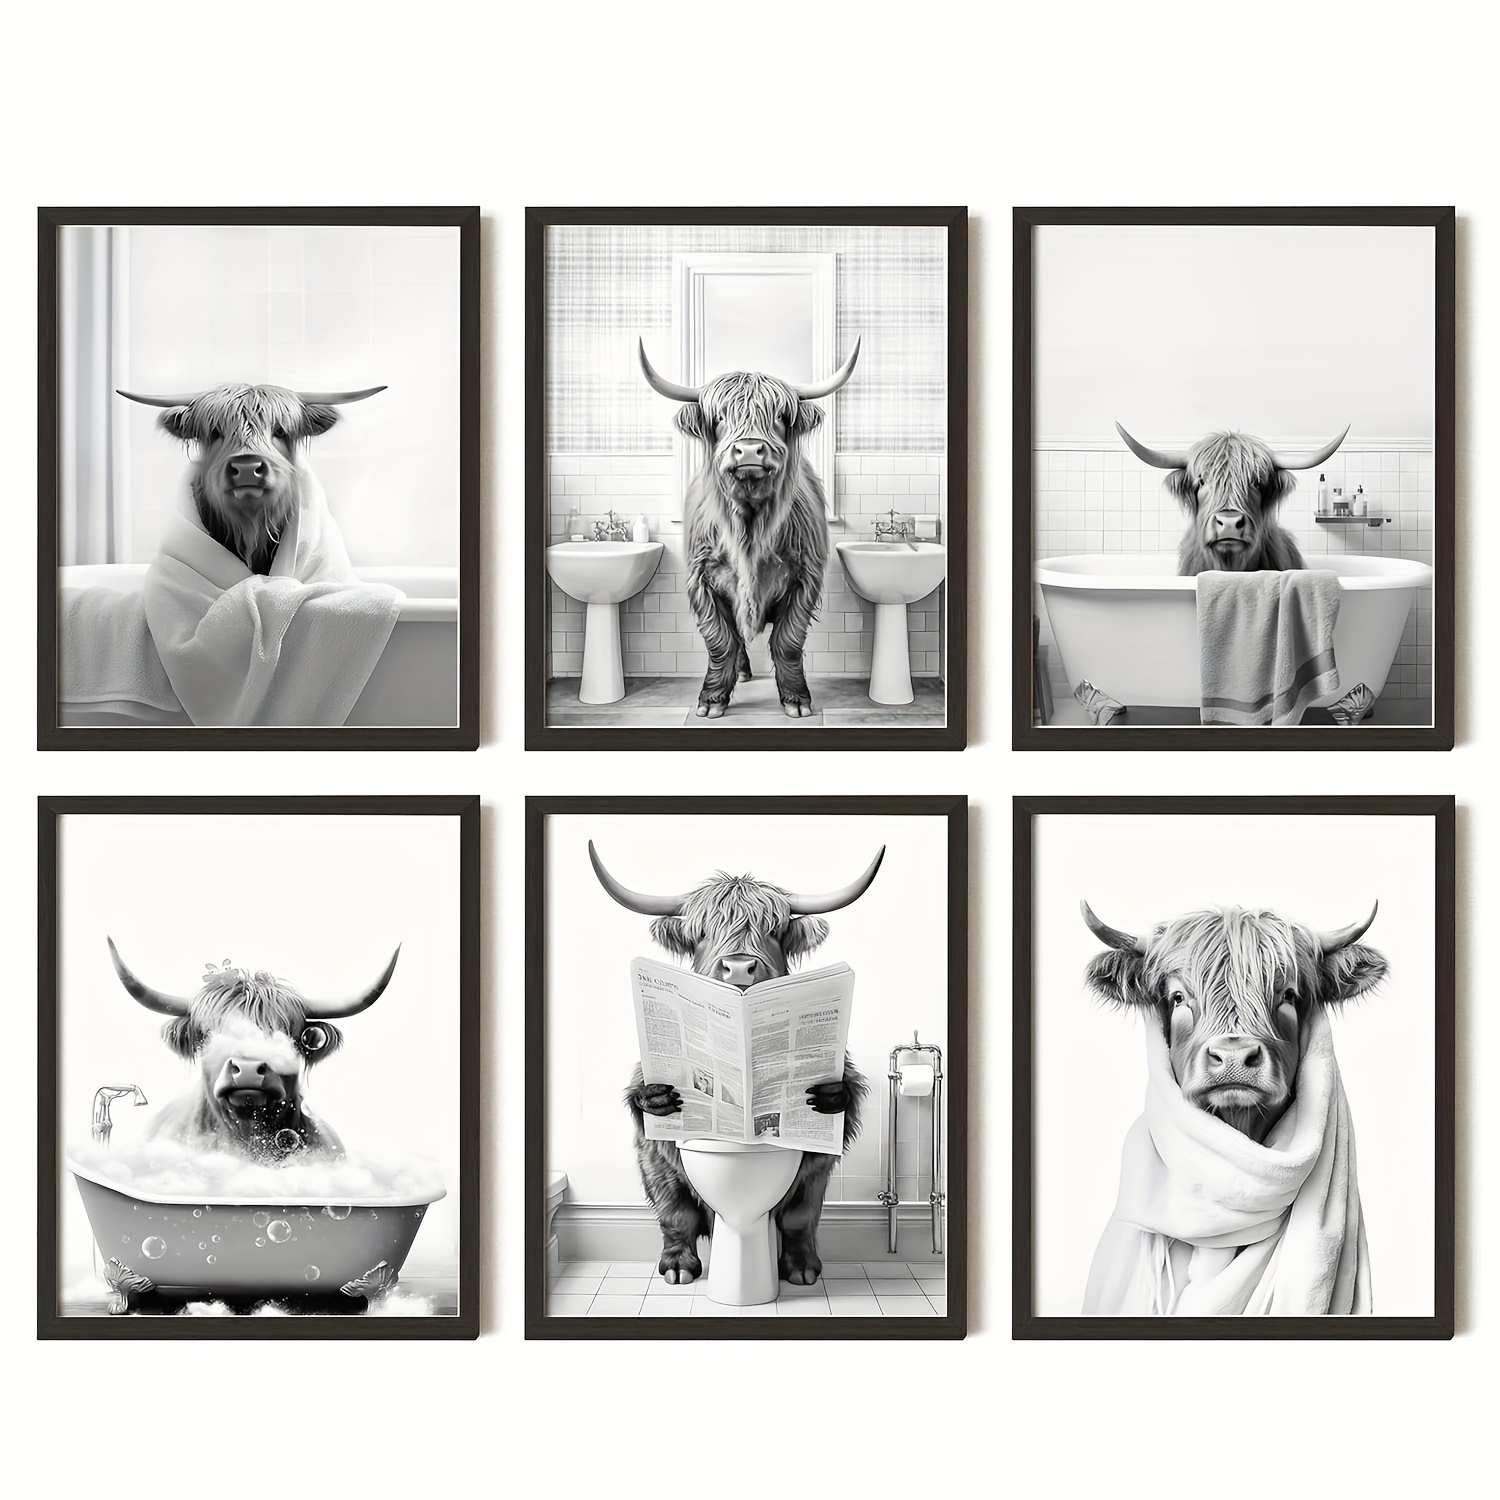 

Art Print Poster Decorated Bathroom Cow Picture Wall Decor - Fun Cow Bathroom Wall Art Print, Black And White Highland Cow Bathroom, Fun Animal Cow (8 "x10" X6pcs) Without Frame Eid Al-adha Mubarak